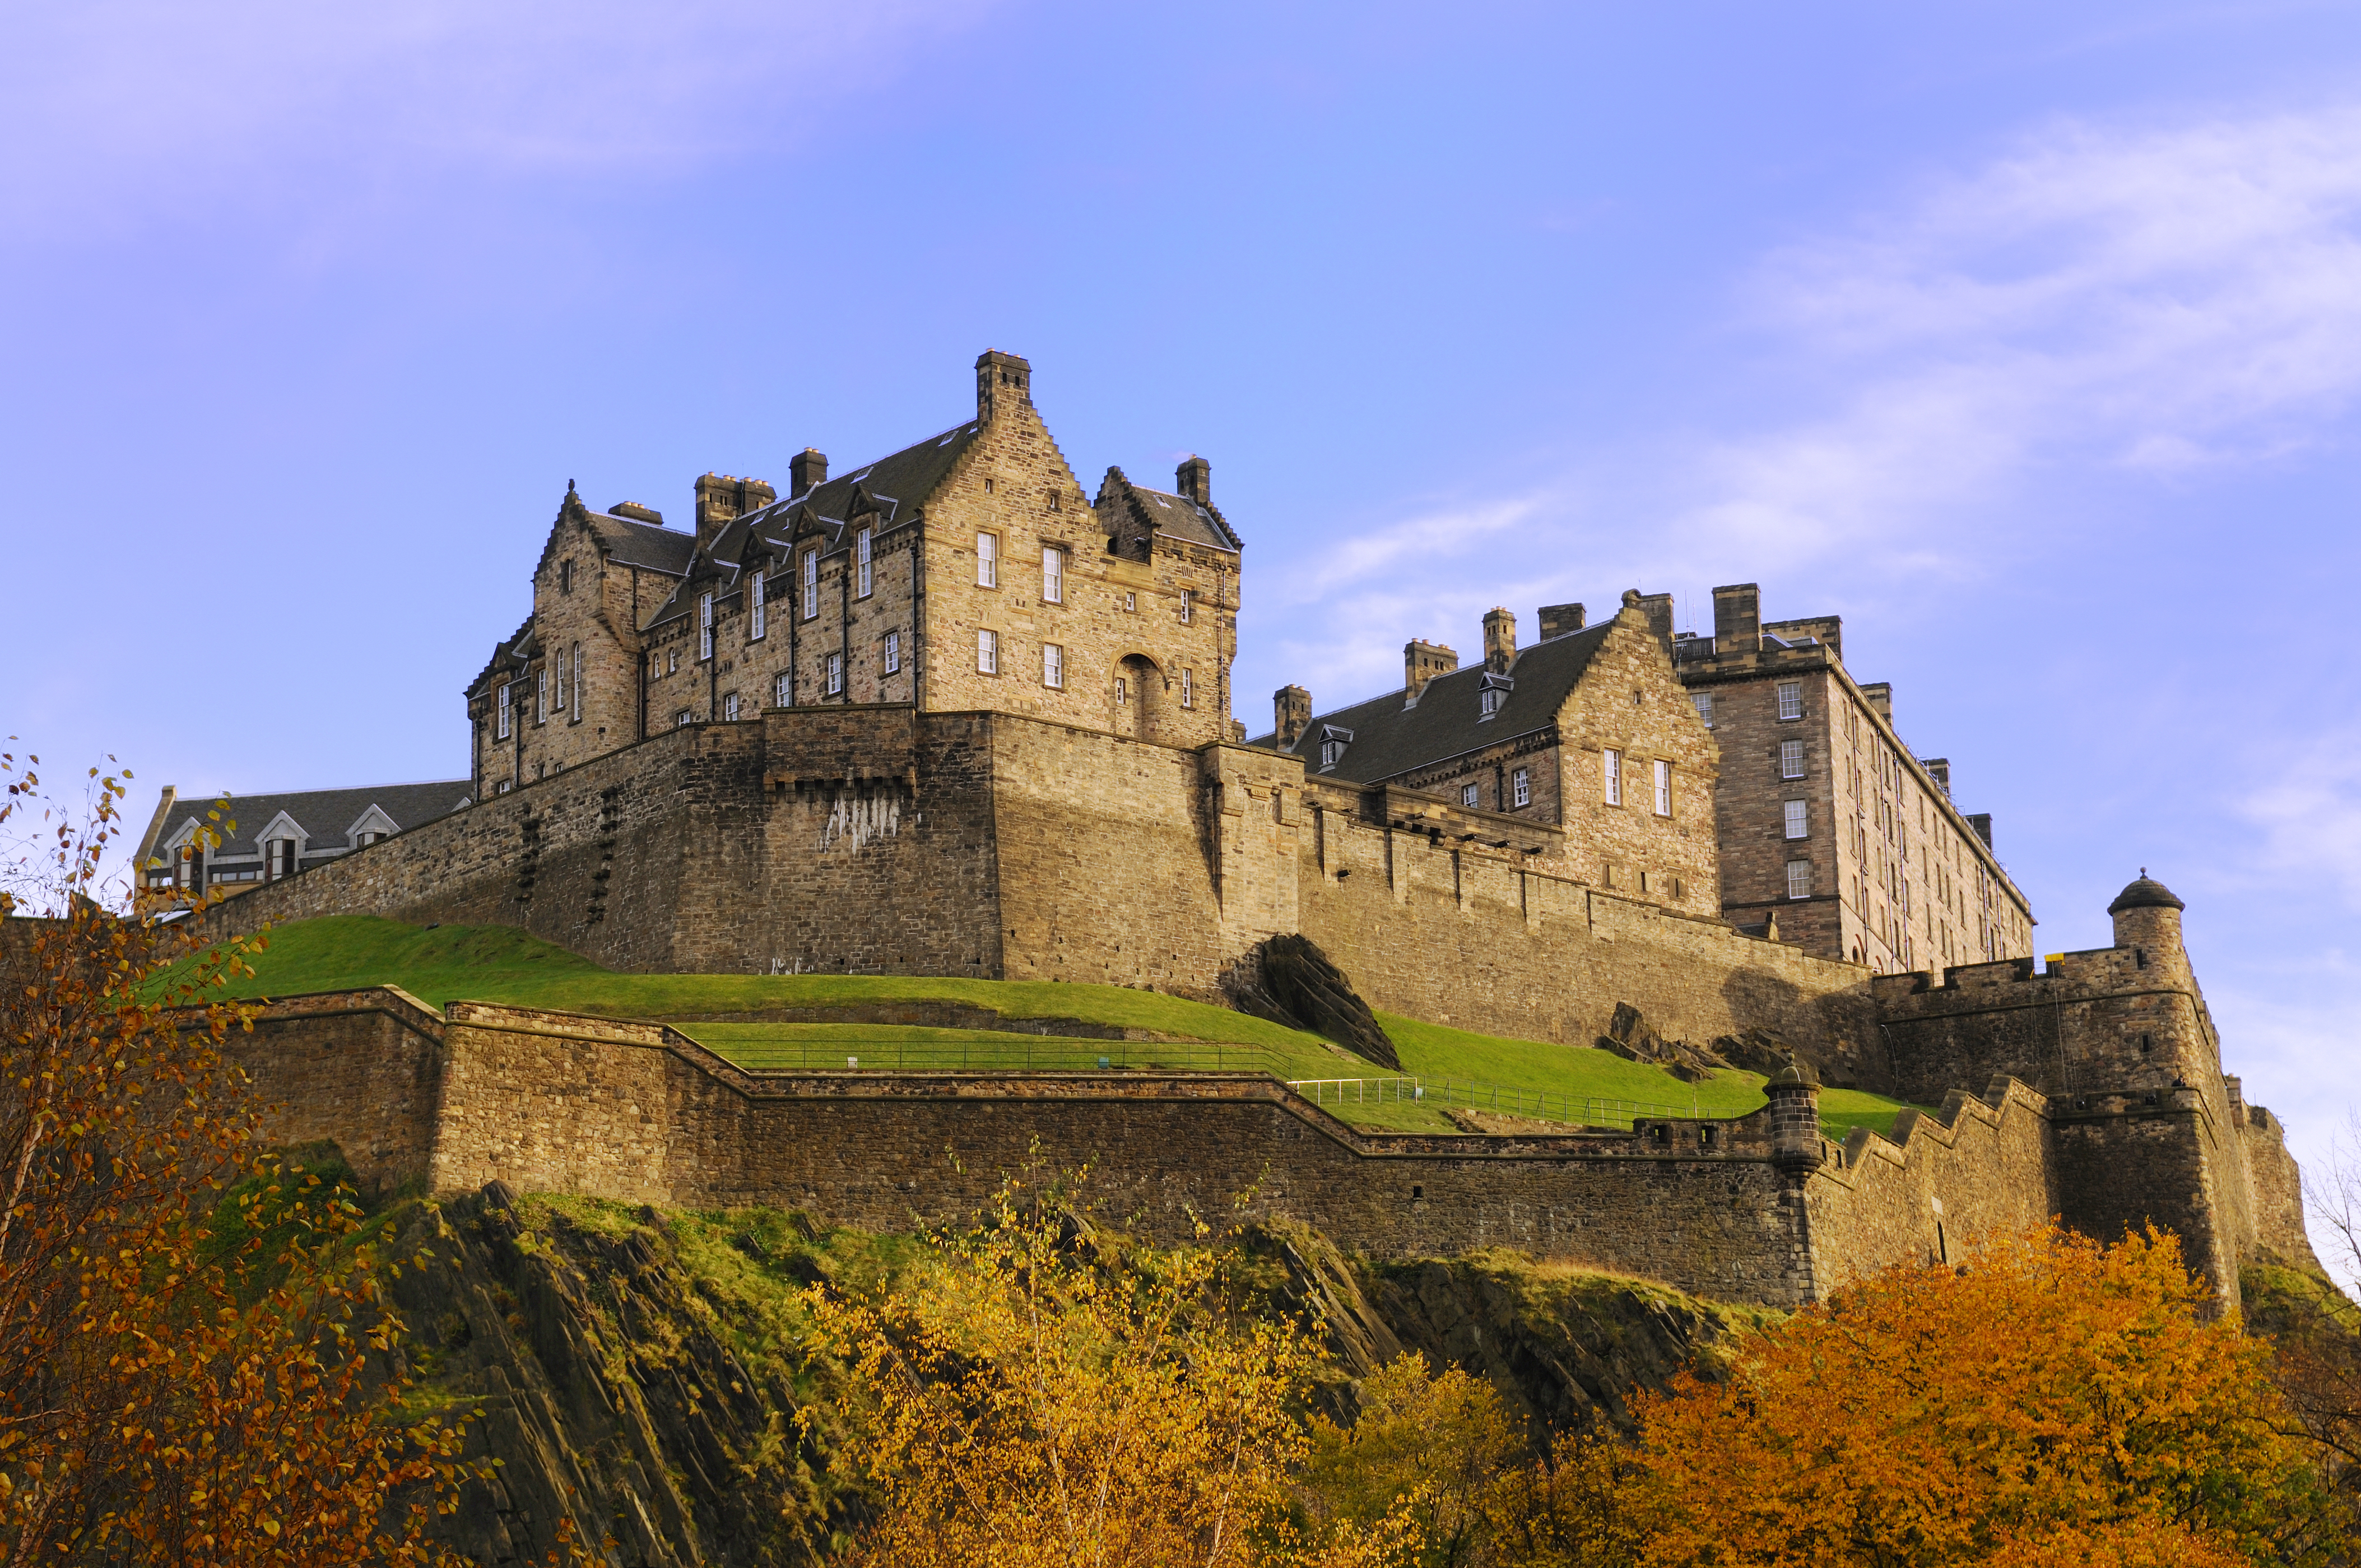 8 Day Amazing Vacation in Scotland with Your Family - Edinburgh Castle in Edinburgh, Scotland